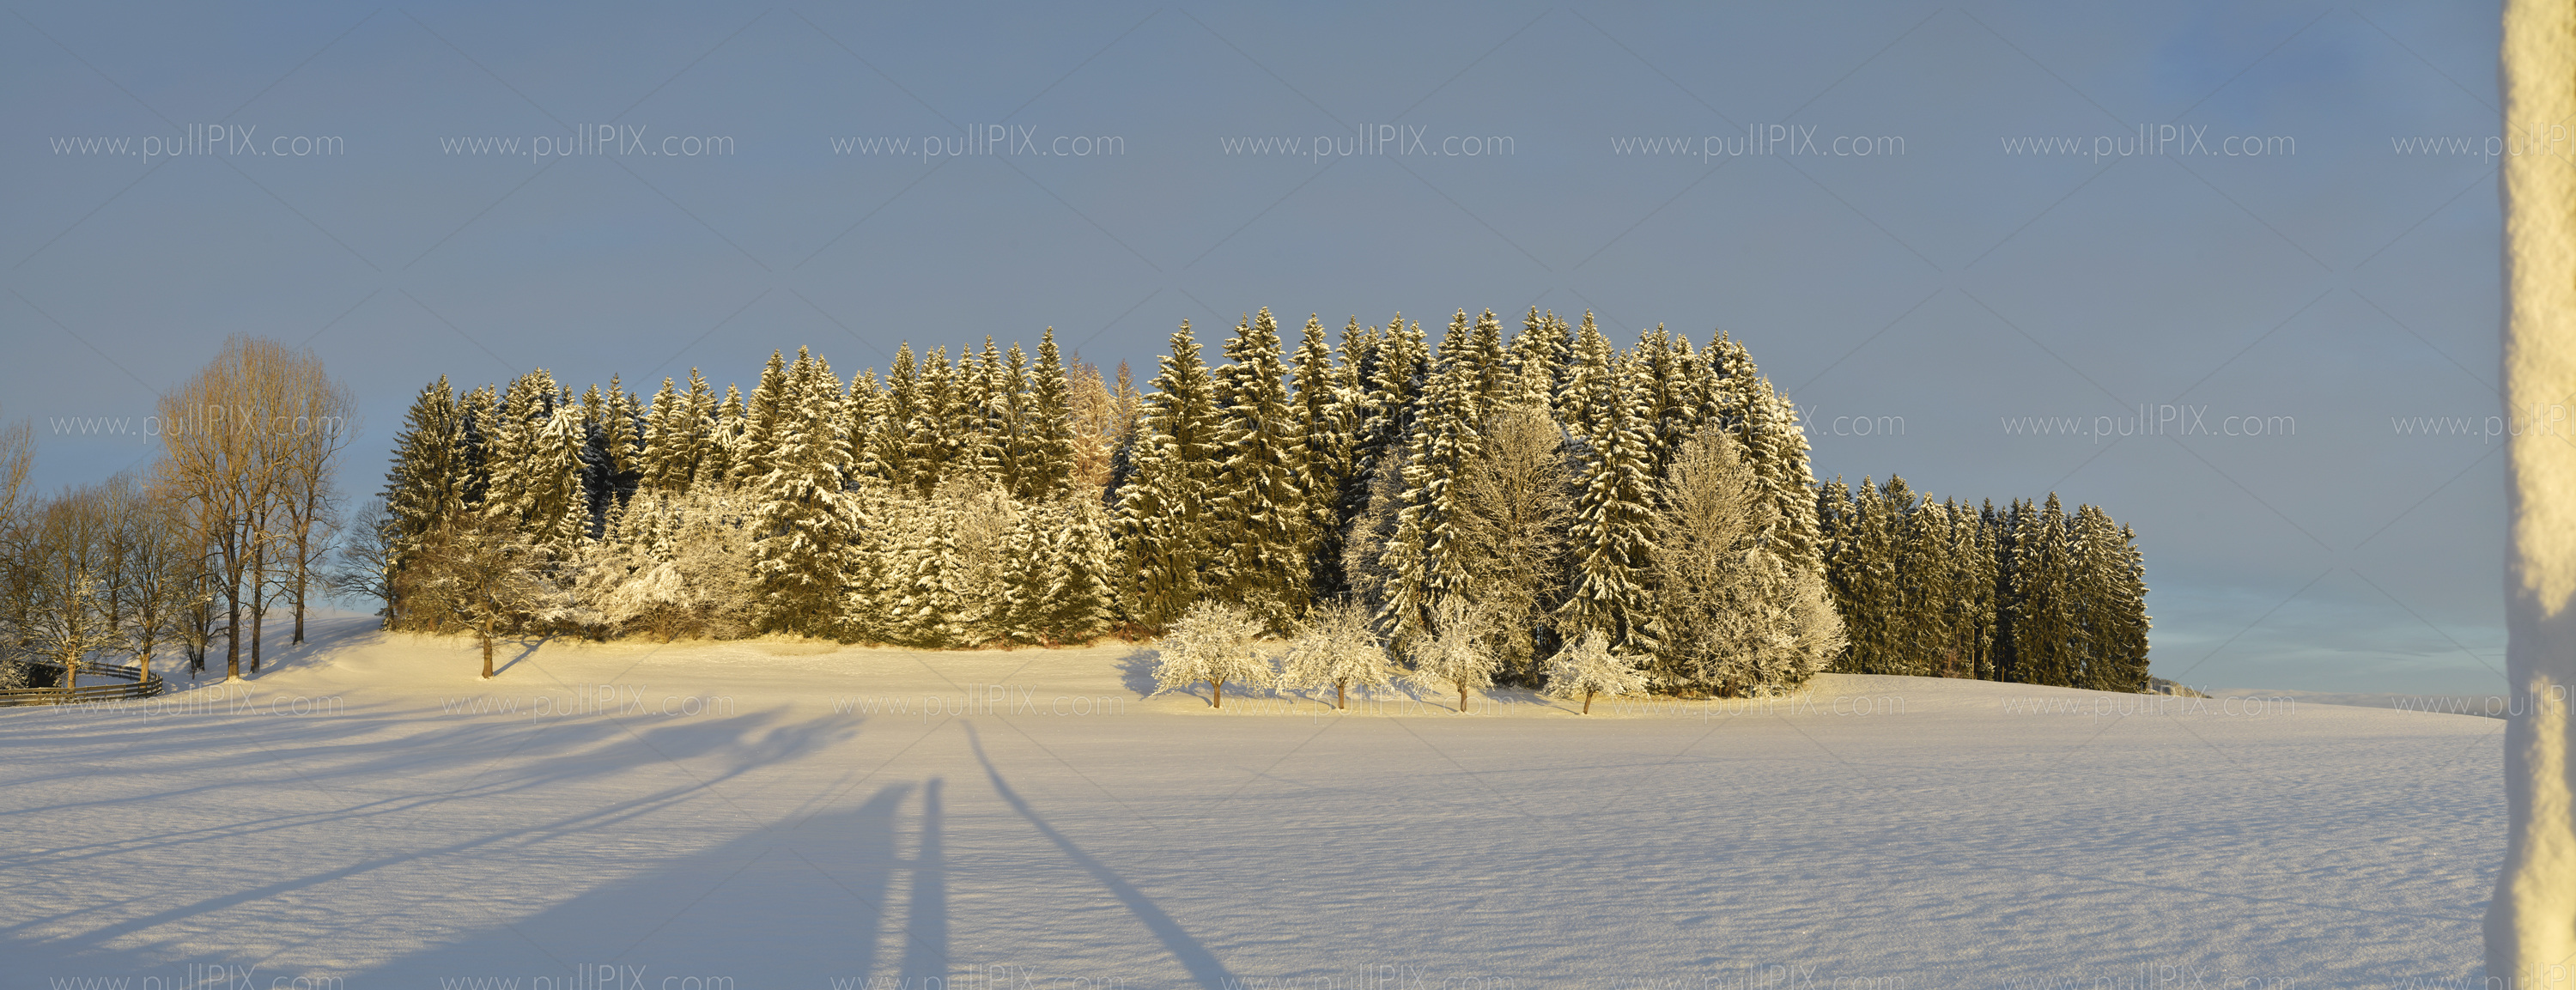 Preview sonnenaufgang im schnee 3.jpg